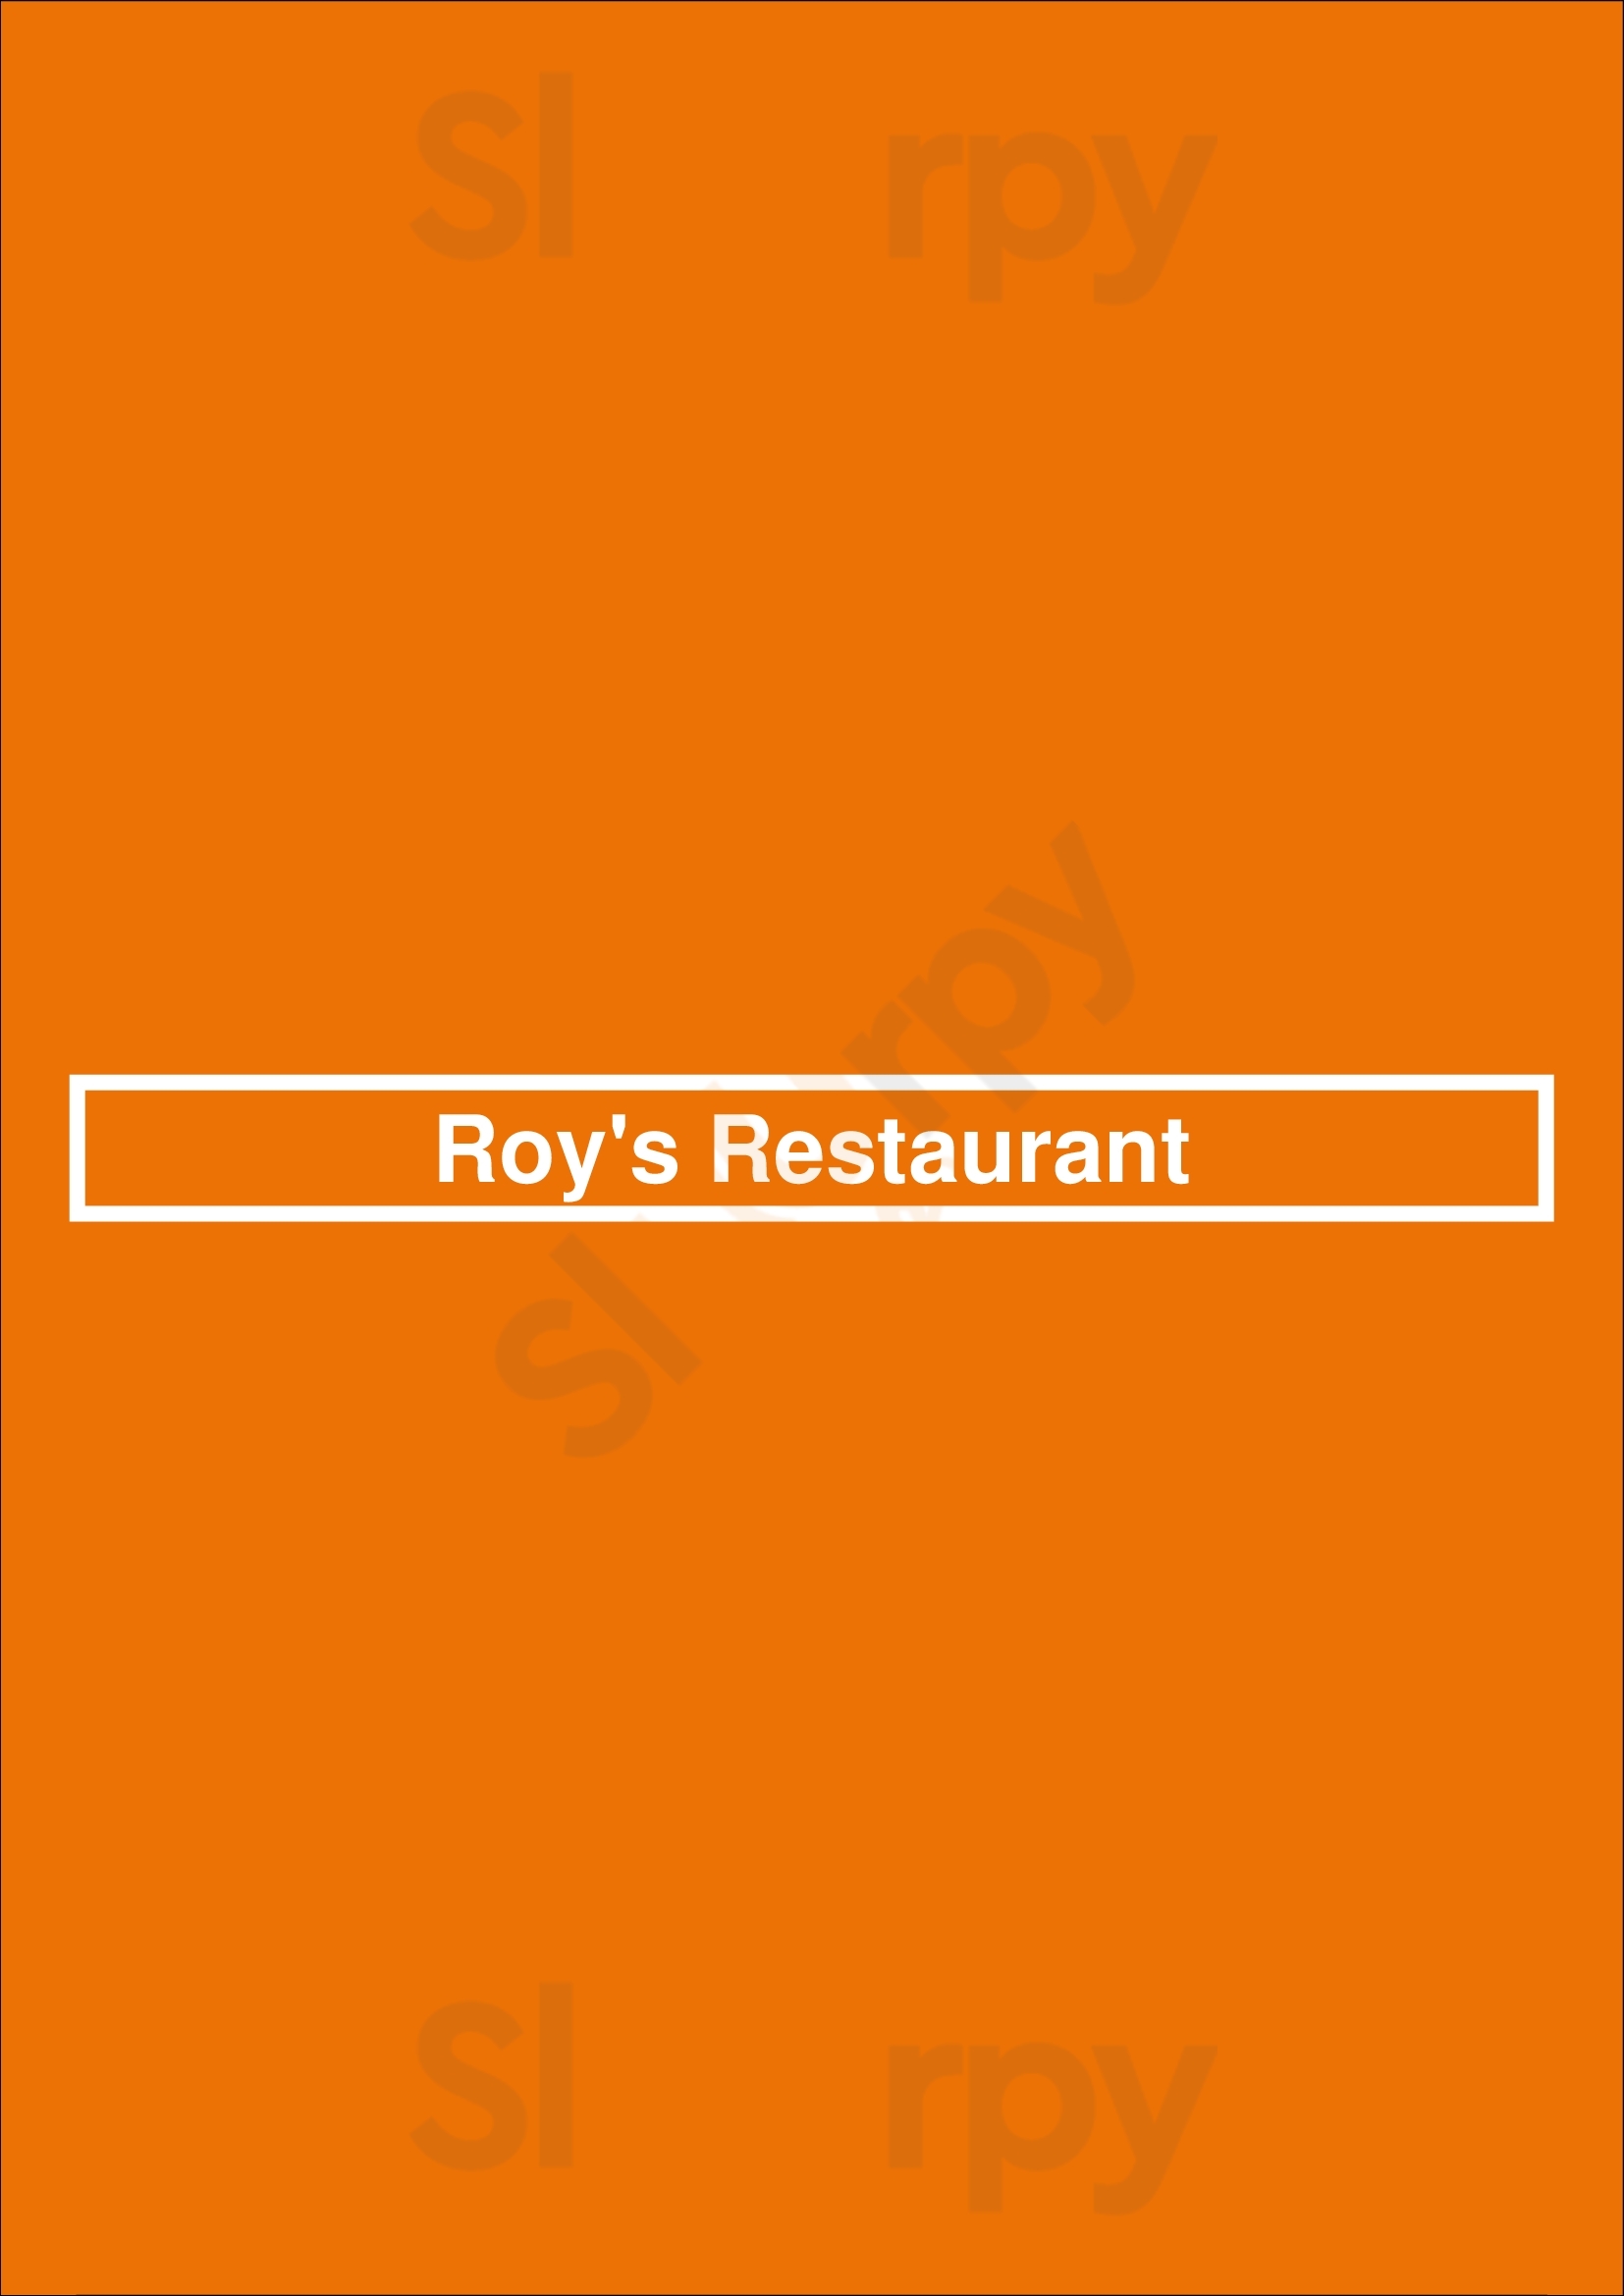 Roy's Restaurant San Francisco Menu - 1